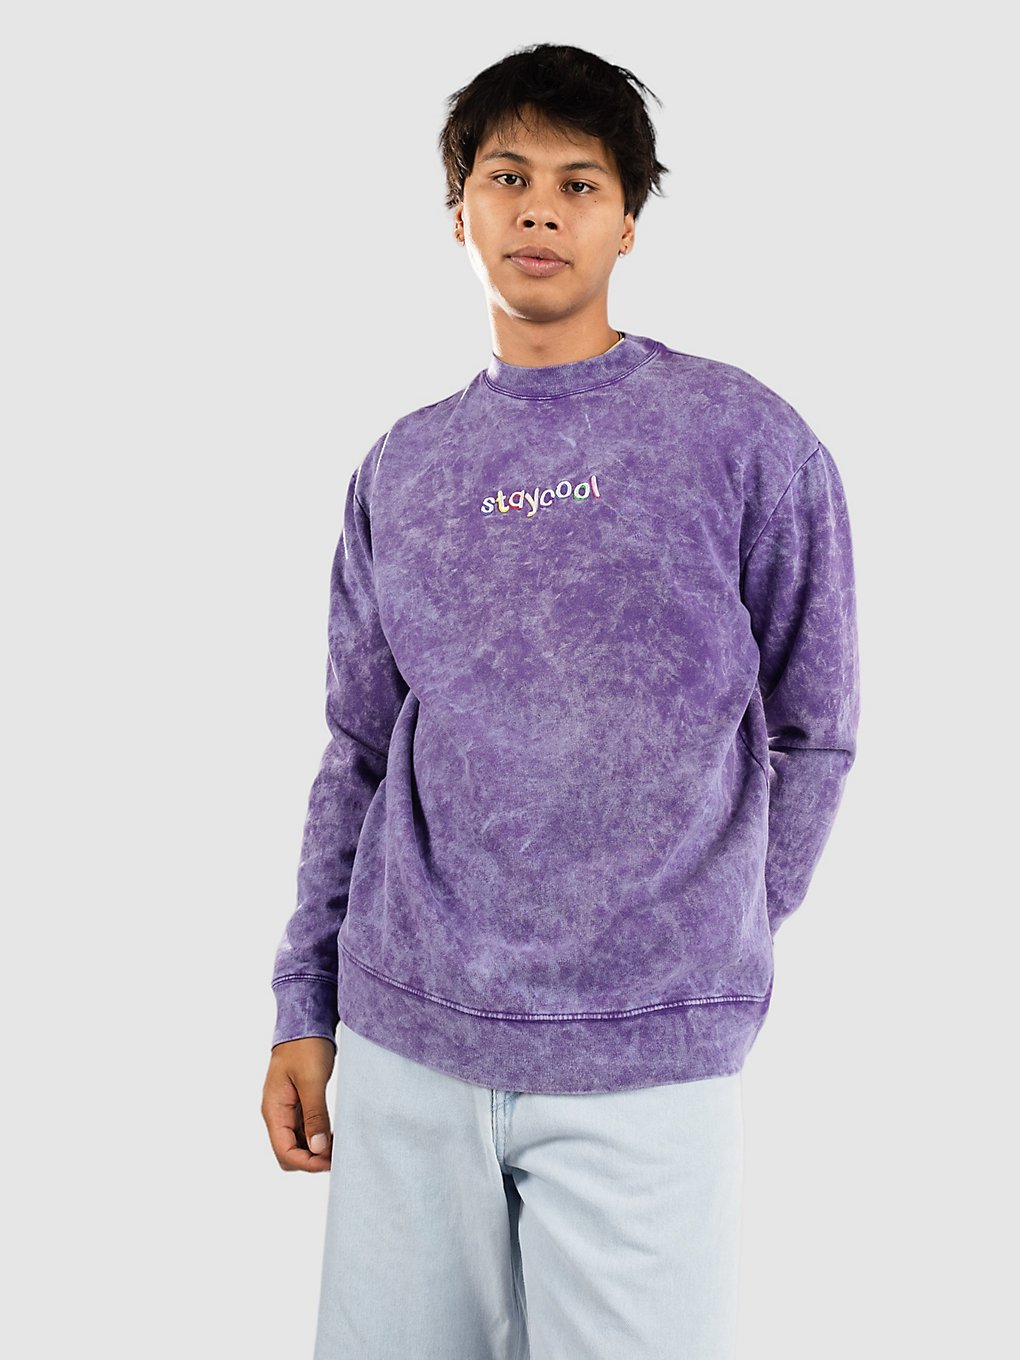 Staycoolnyc Classic Mineral Sweater purple kaufen